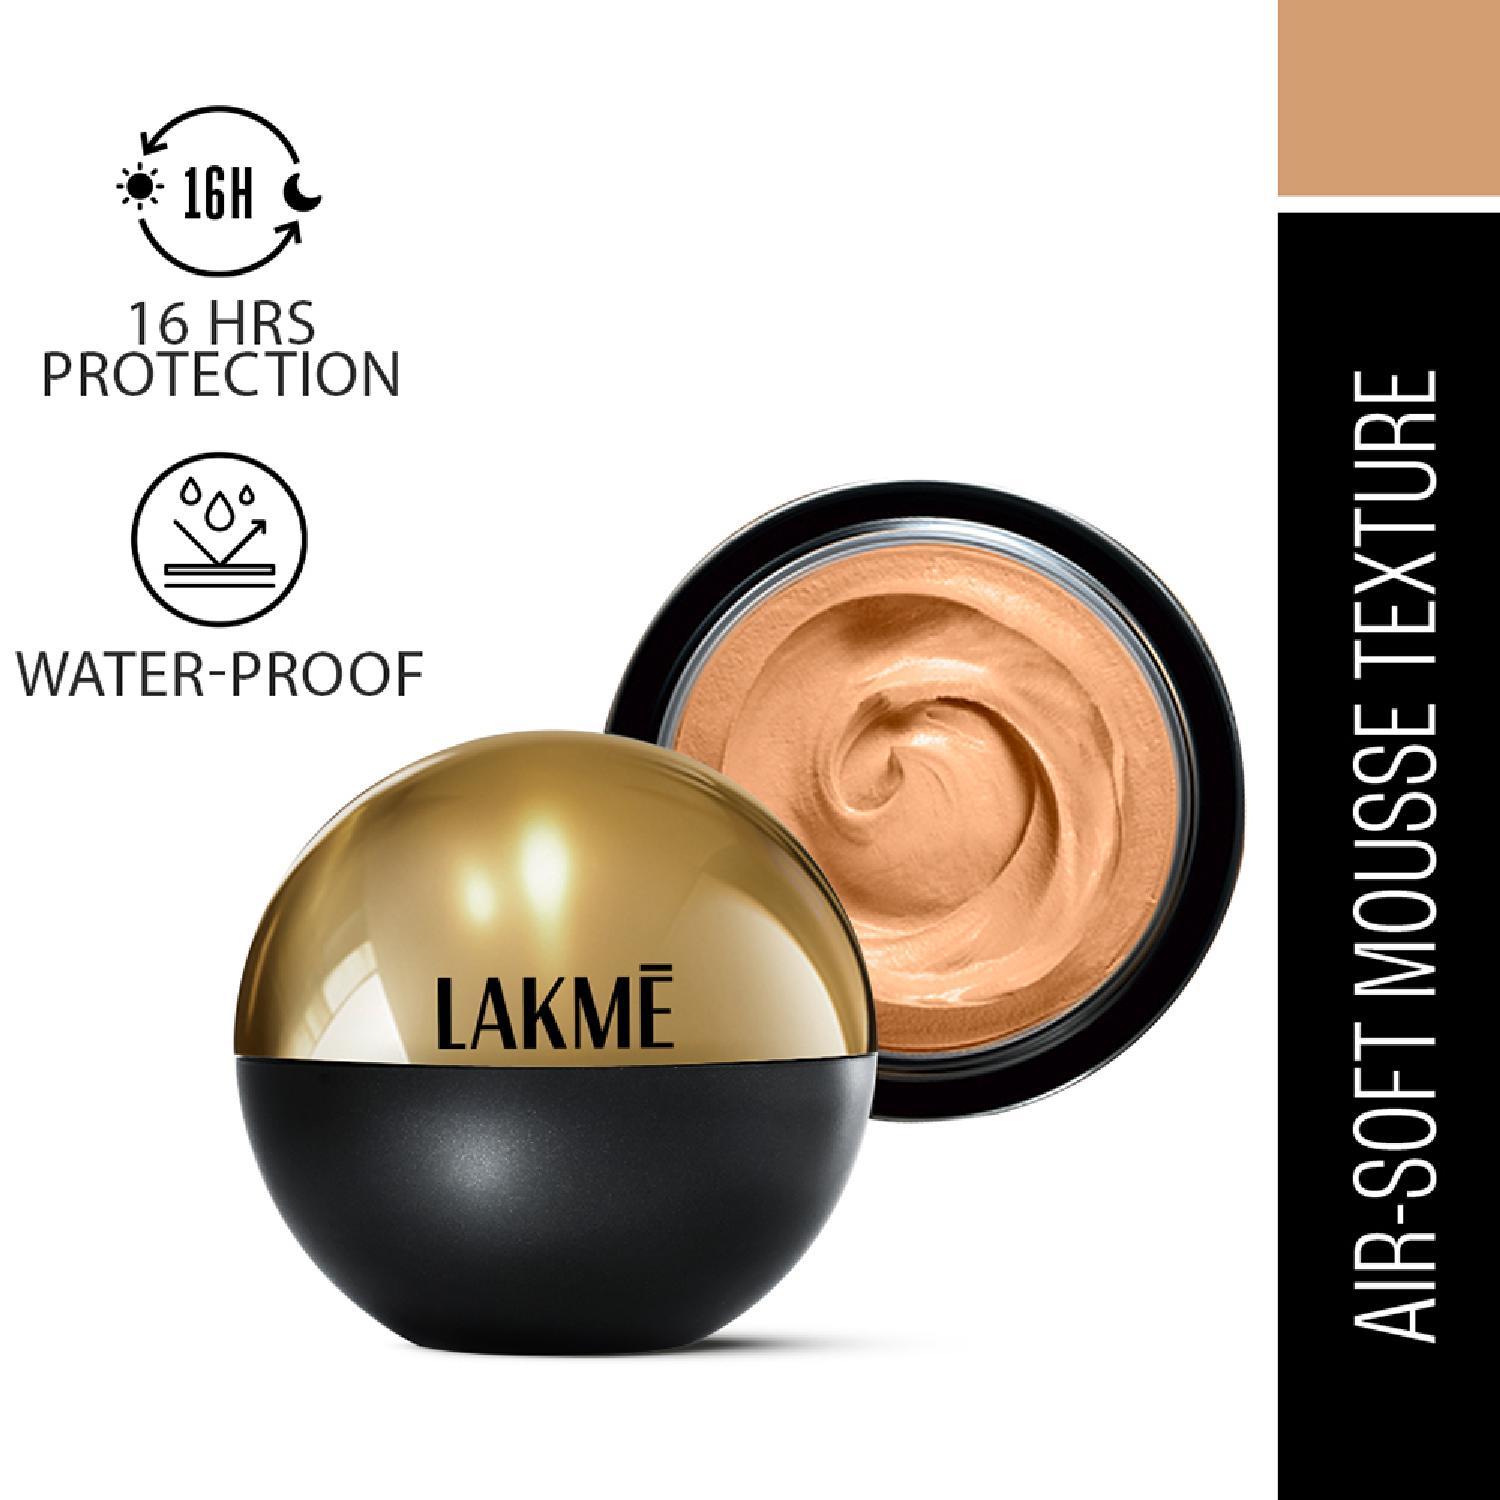 Lakme | Lakme Xtraordin-airy Mattereal Mousse Foundation, 05 Beige Honey (25 g)